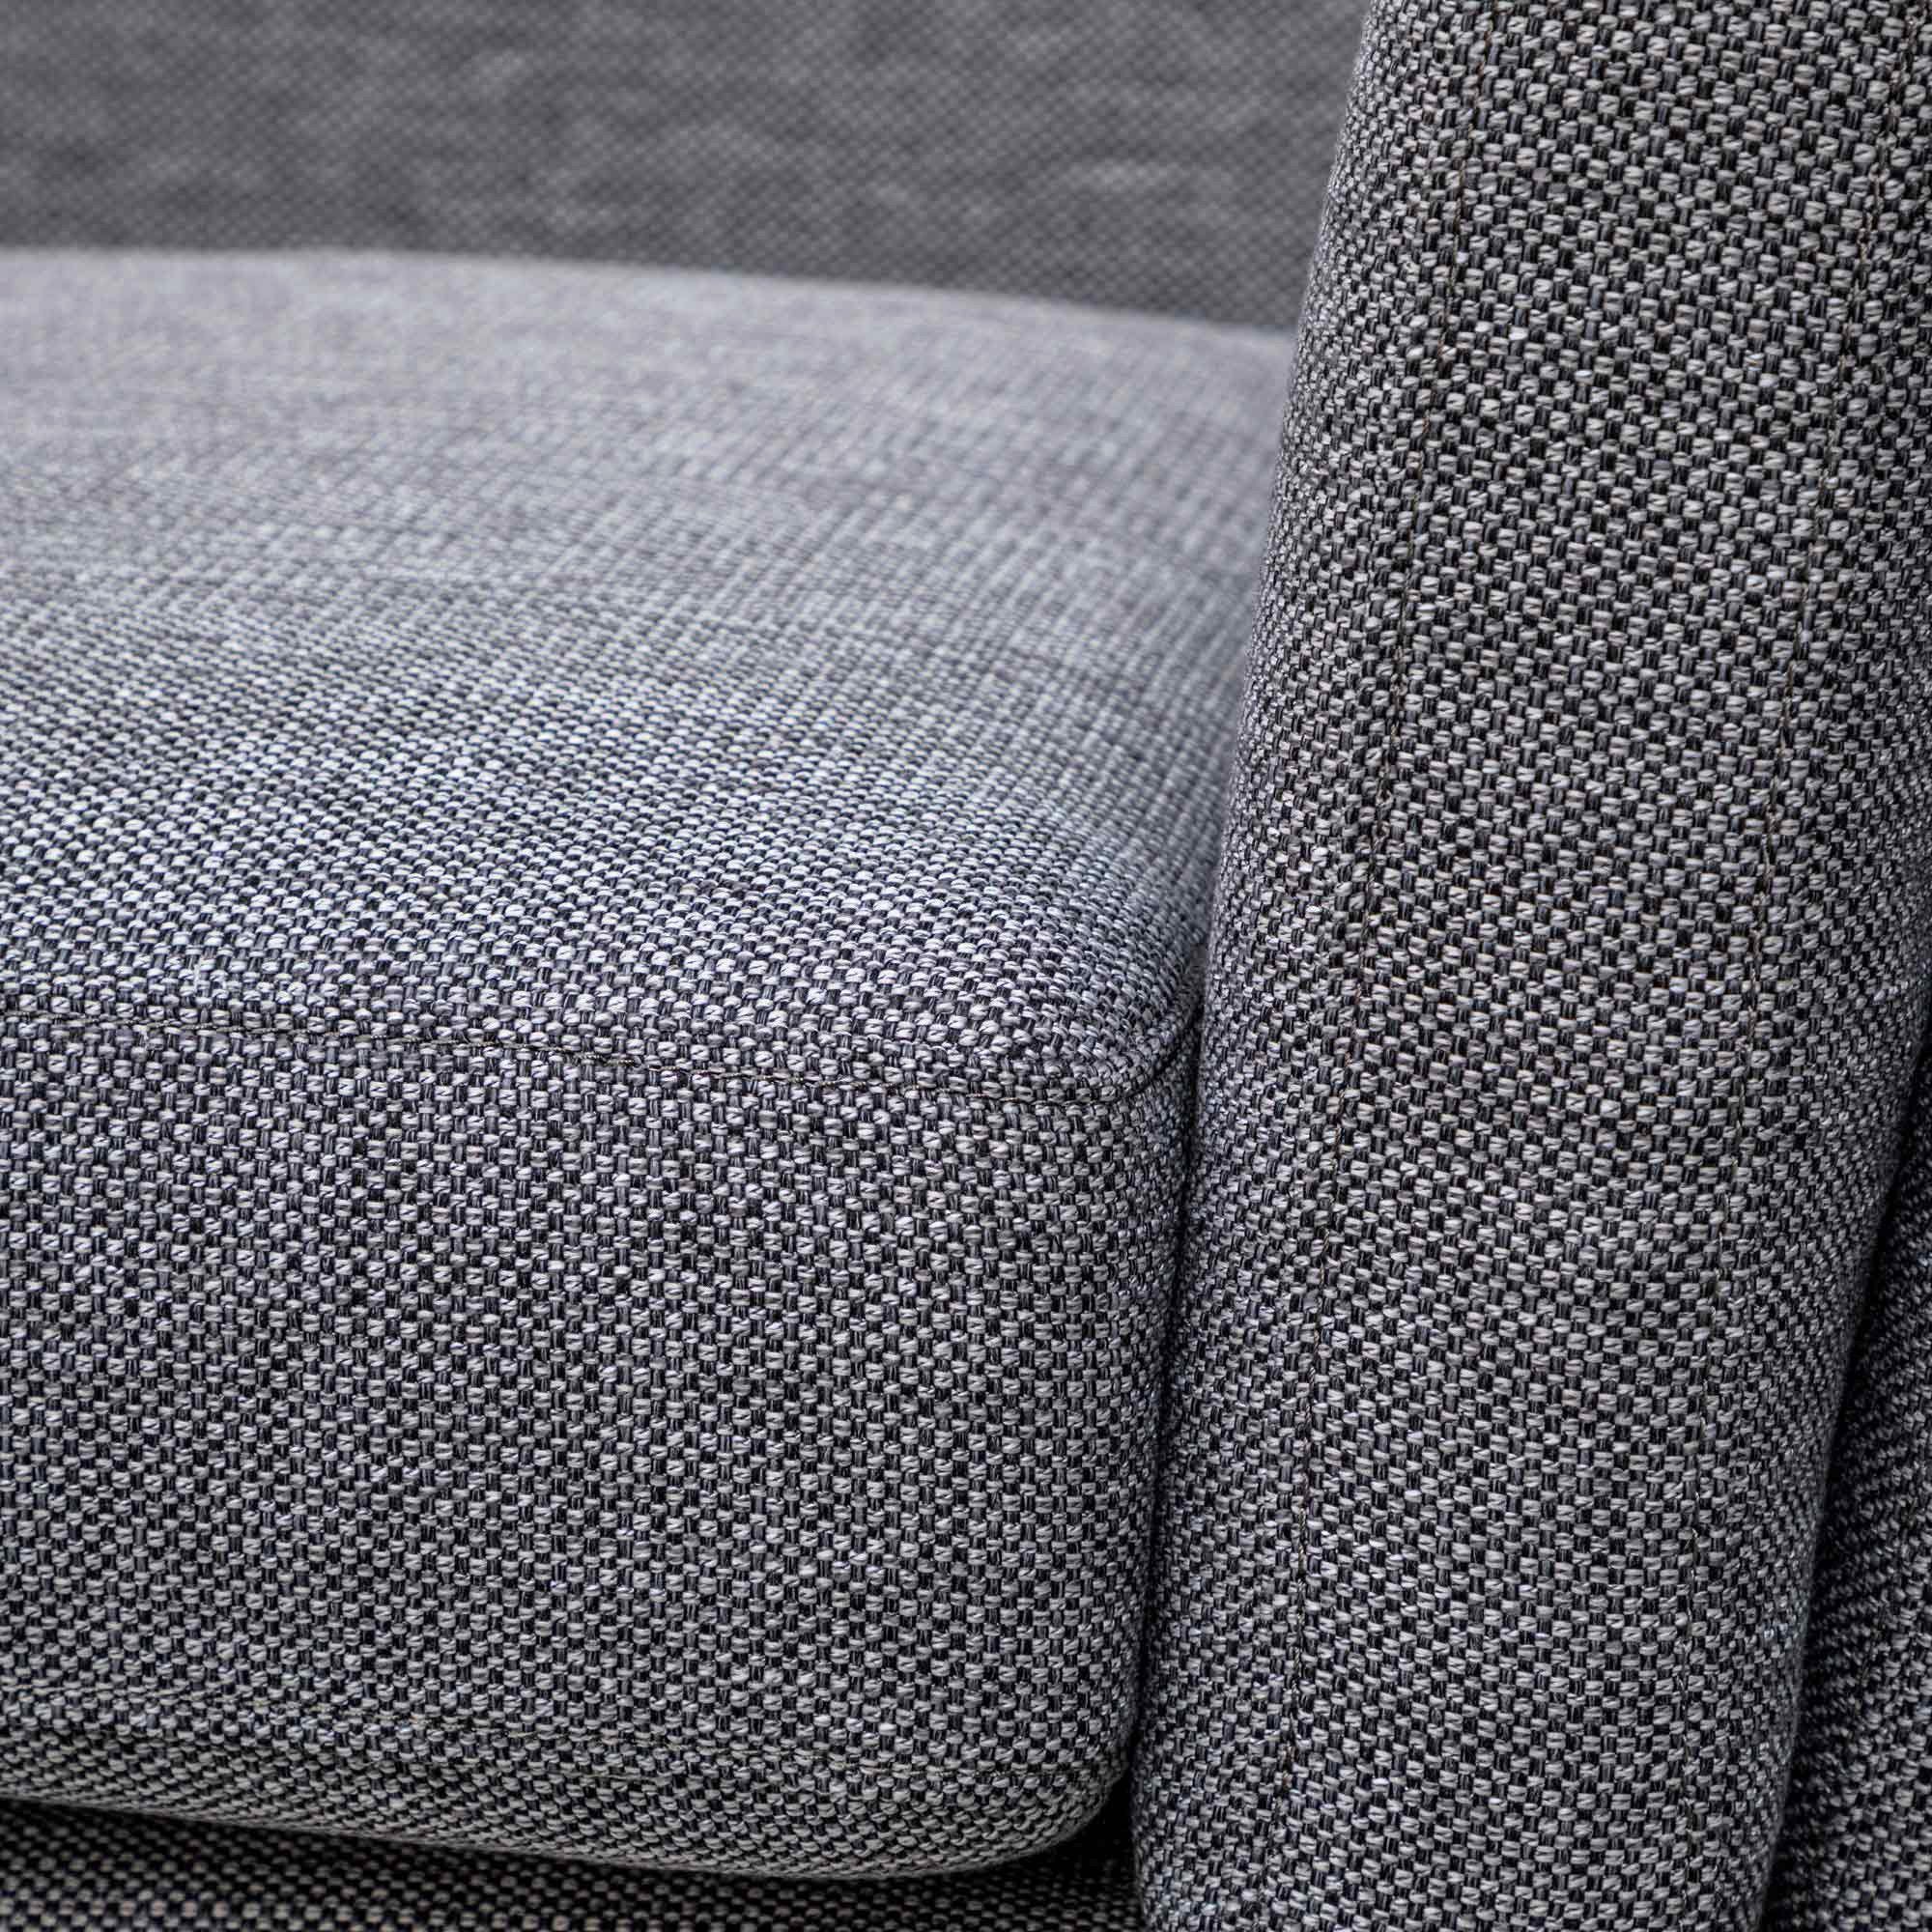 Katherine 2S Sofa - Graphite Grey - Sofas